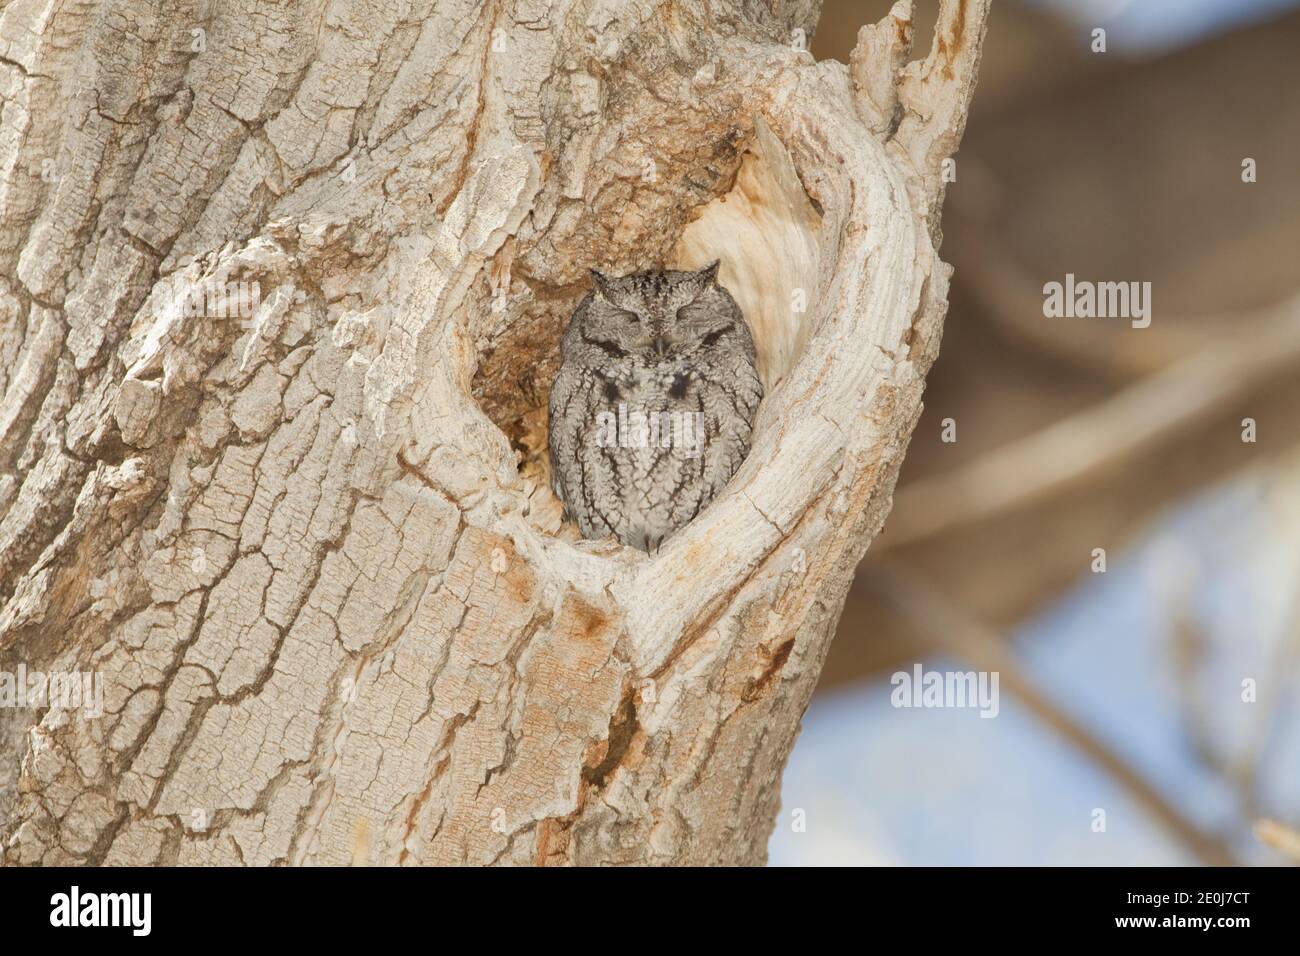 Western Screech-Owl, Megascops kennicottii, in cavity of Fremont's Cottonwood Tree, Populus fremontii. Stock Photo